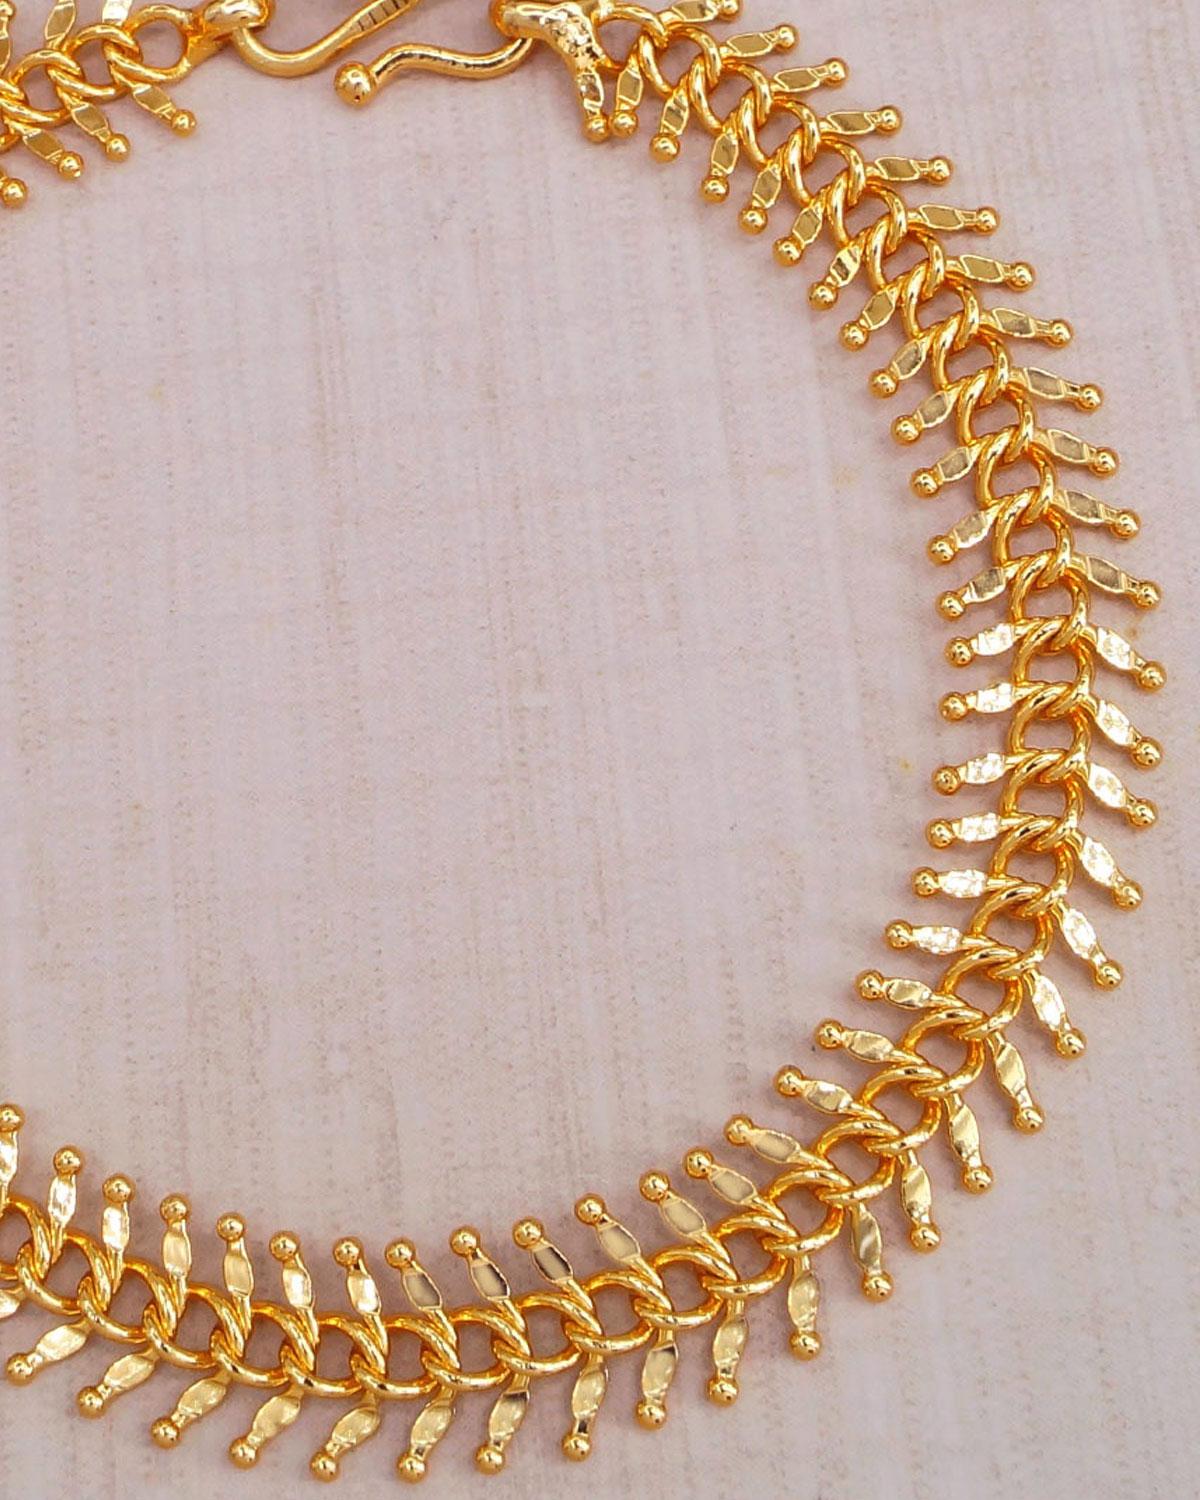 Grand Gold Bracelet For Men Premium Fashion Jewelry